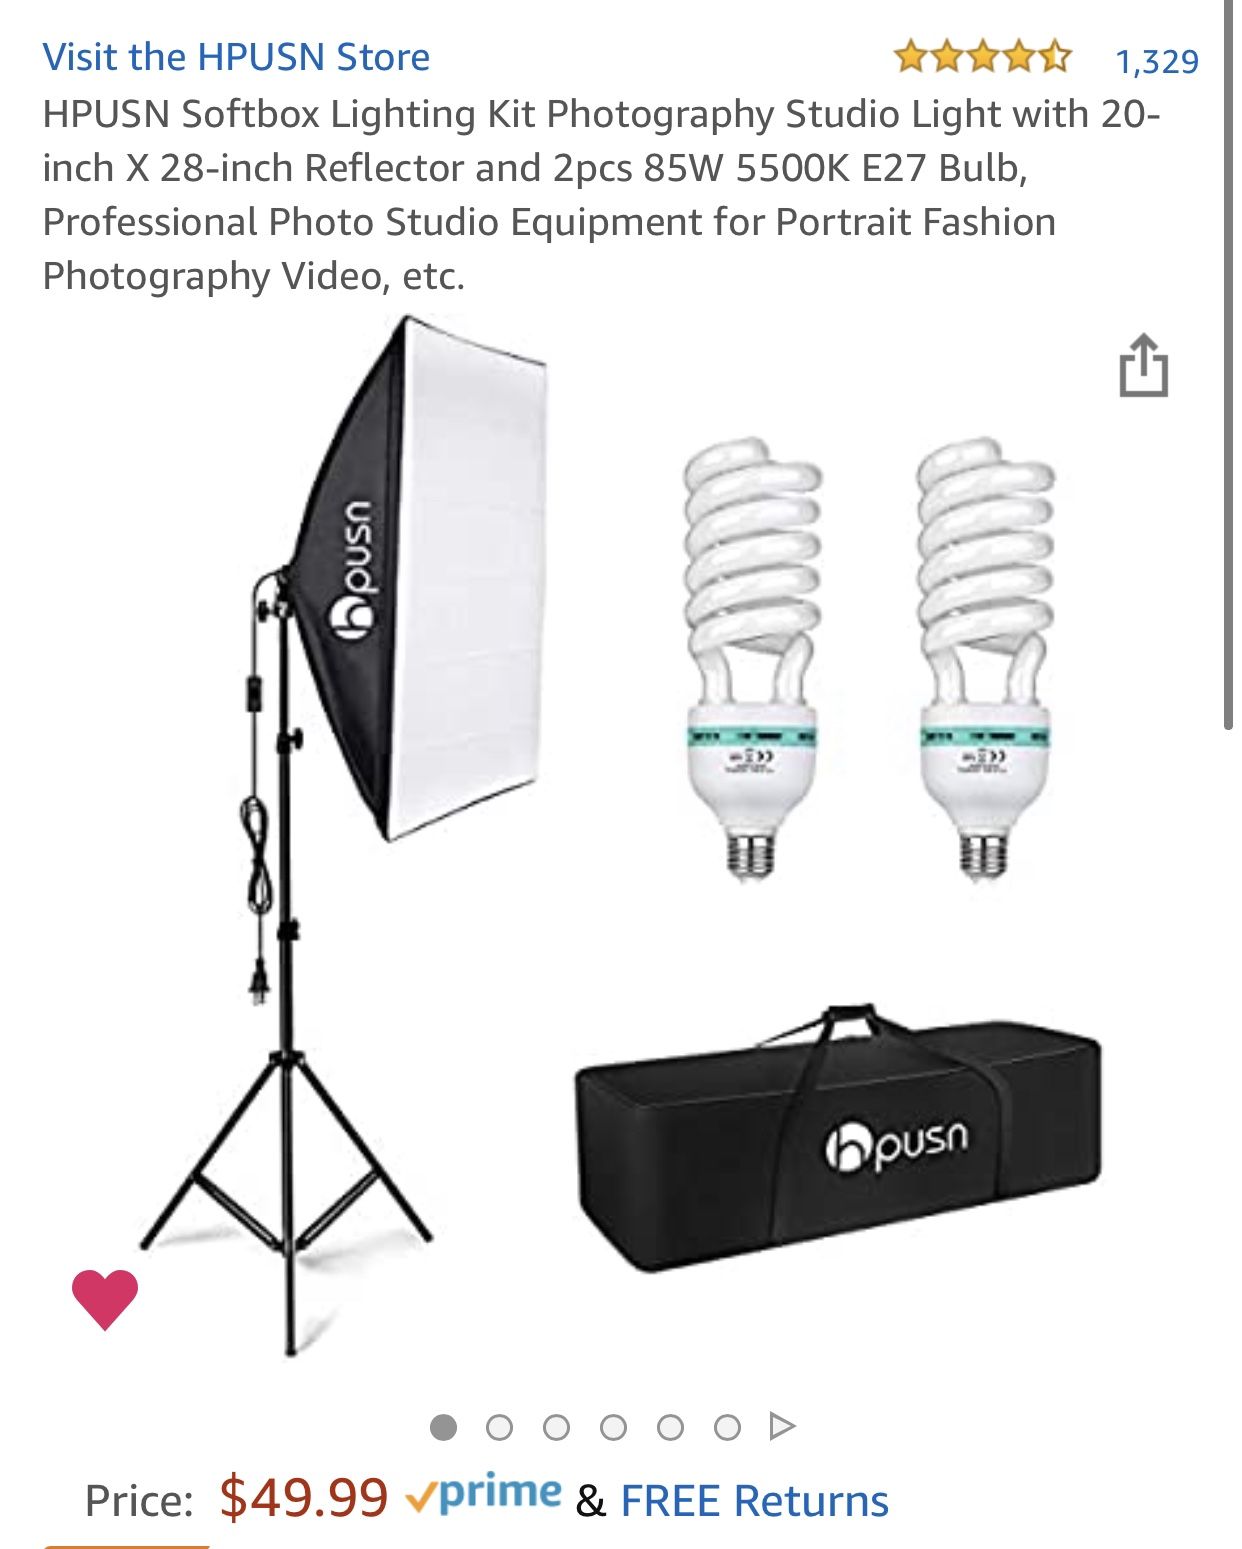 NEW!!! Professional Photography Lighting Kit